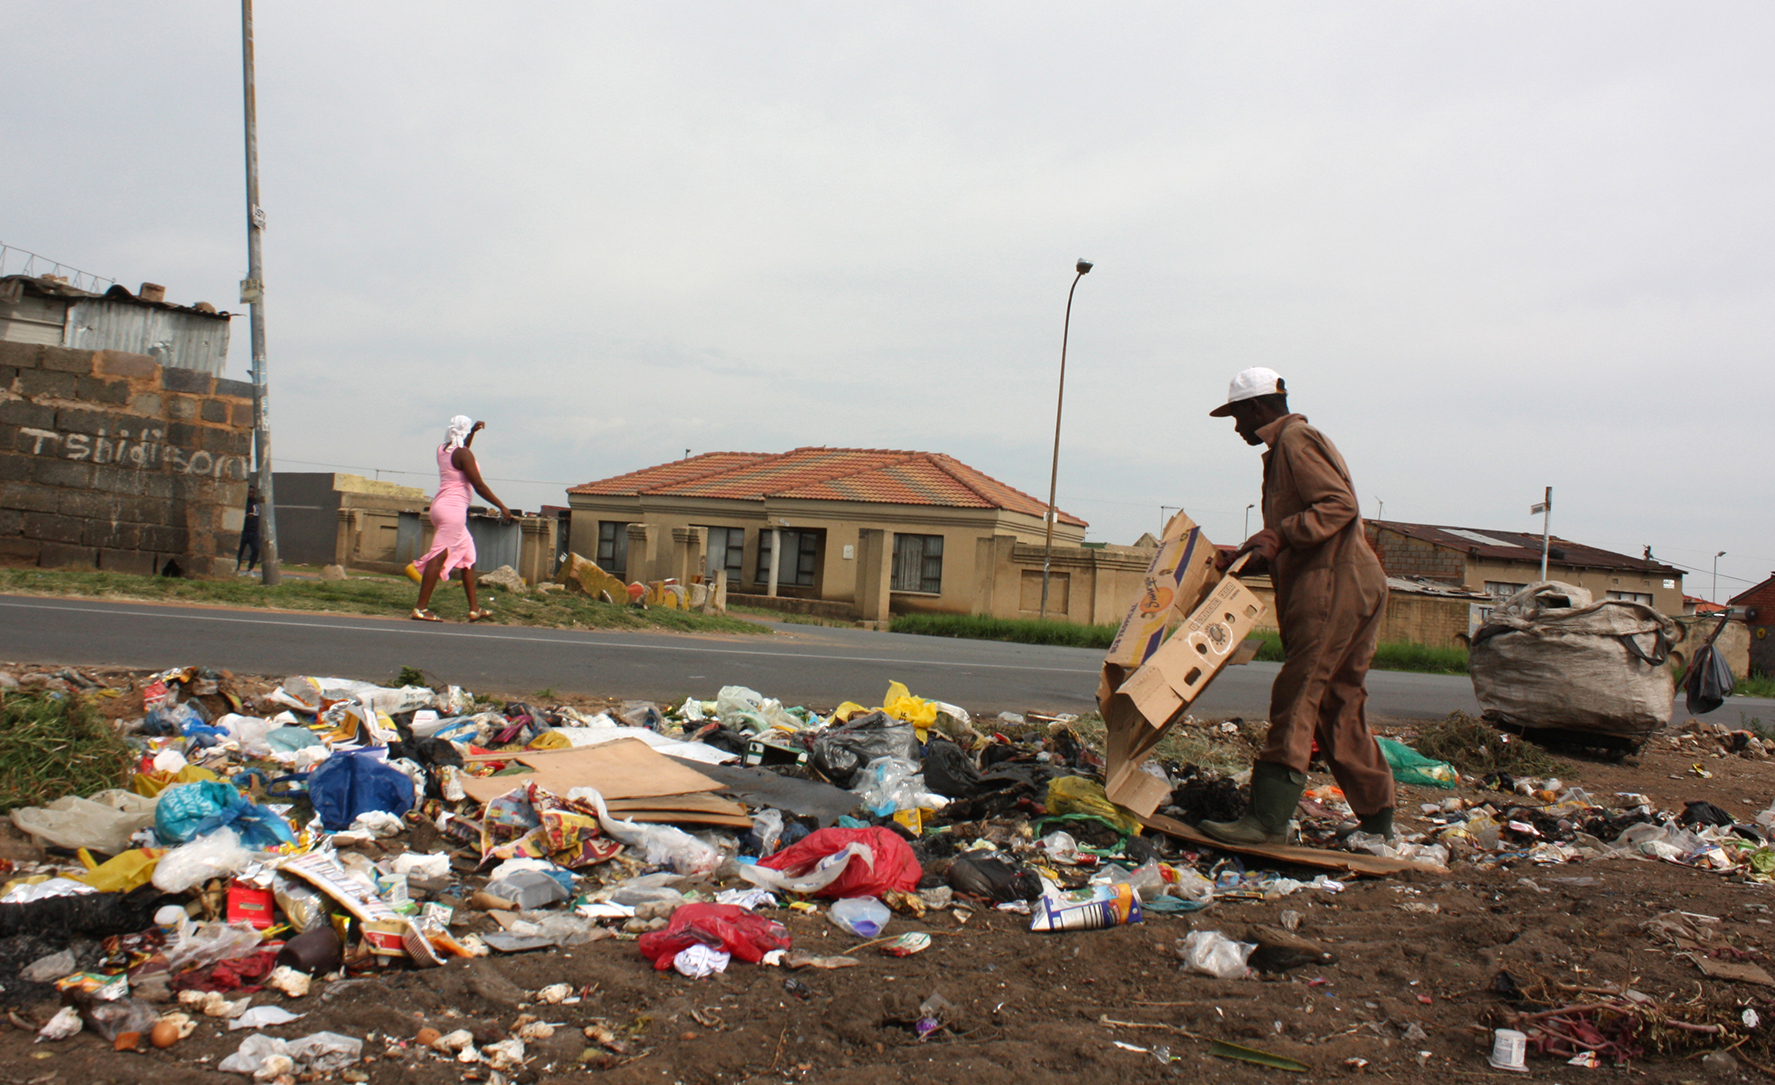 township rubbish recycling